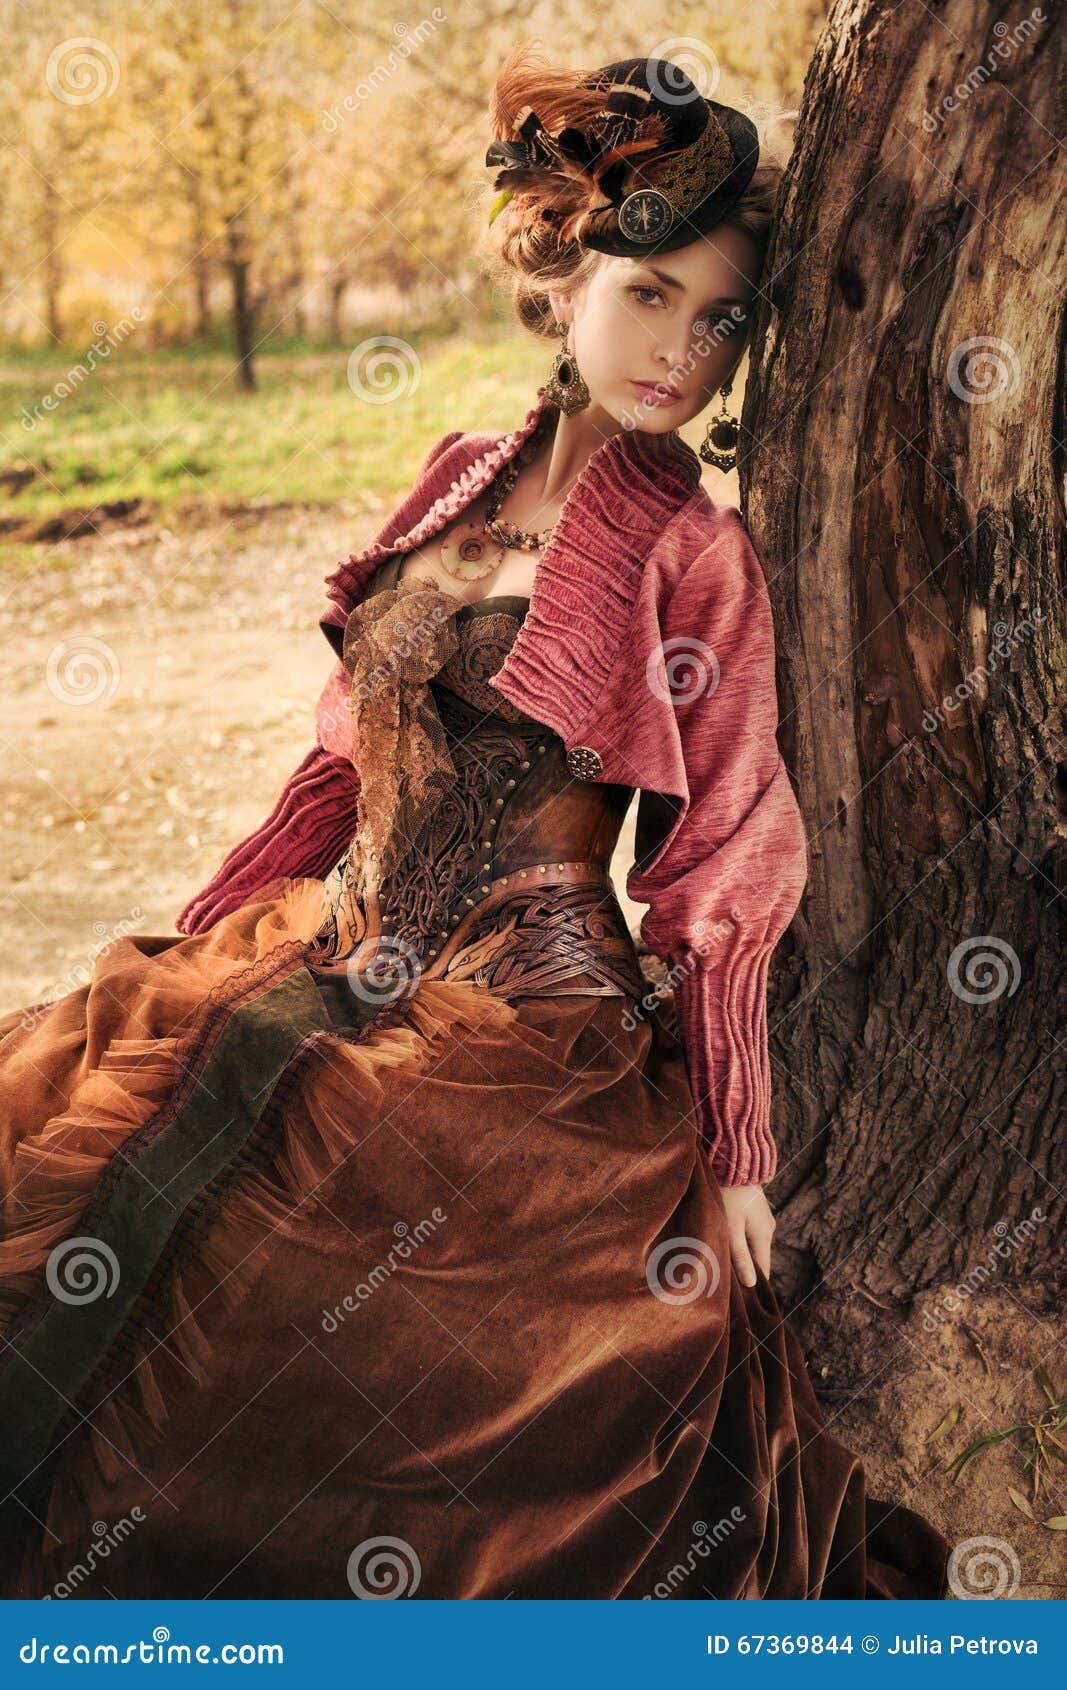 portrait of romantic girl in historical dress.